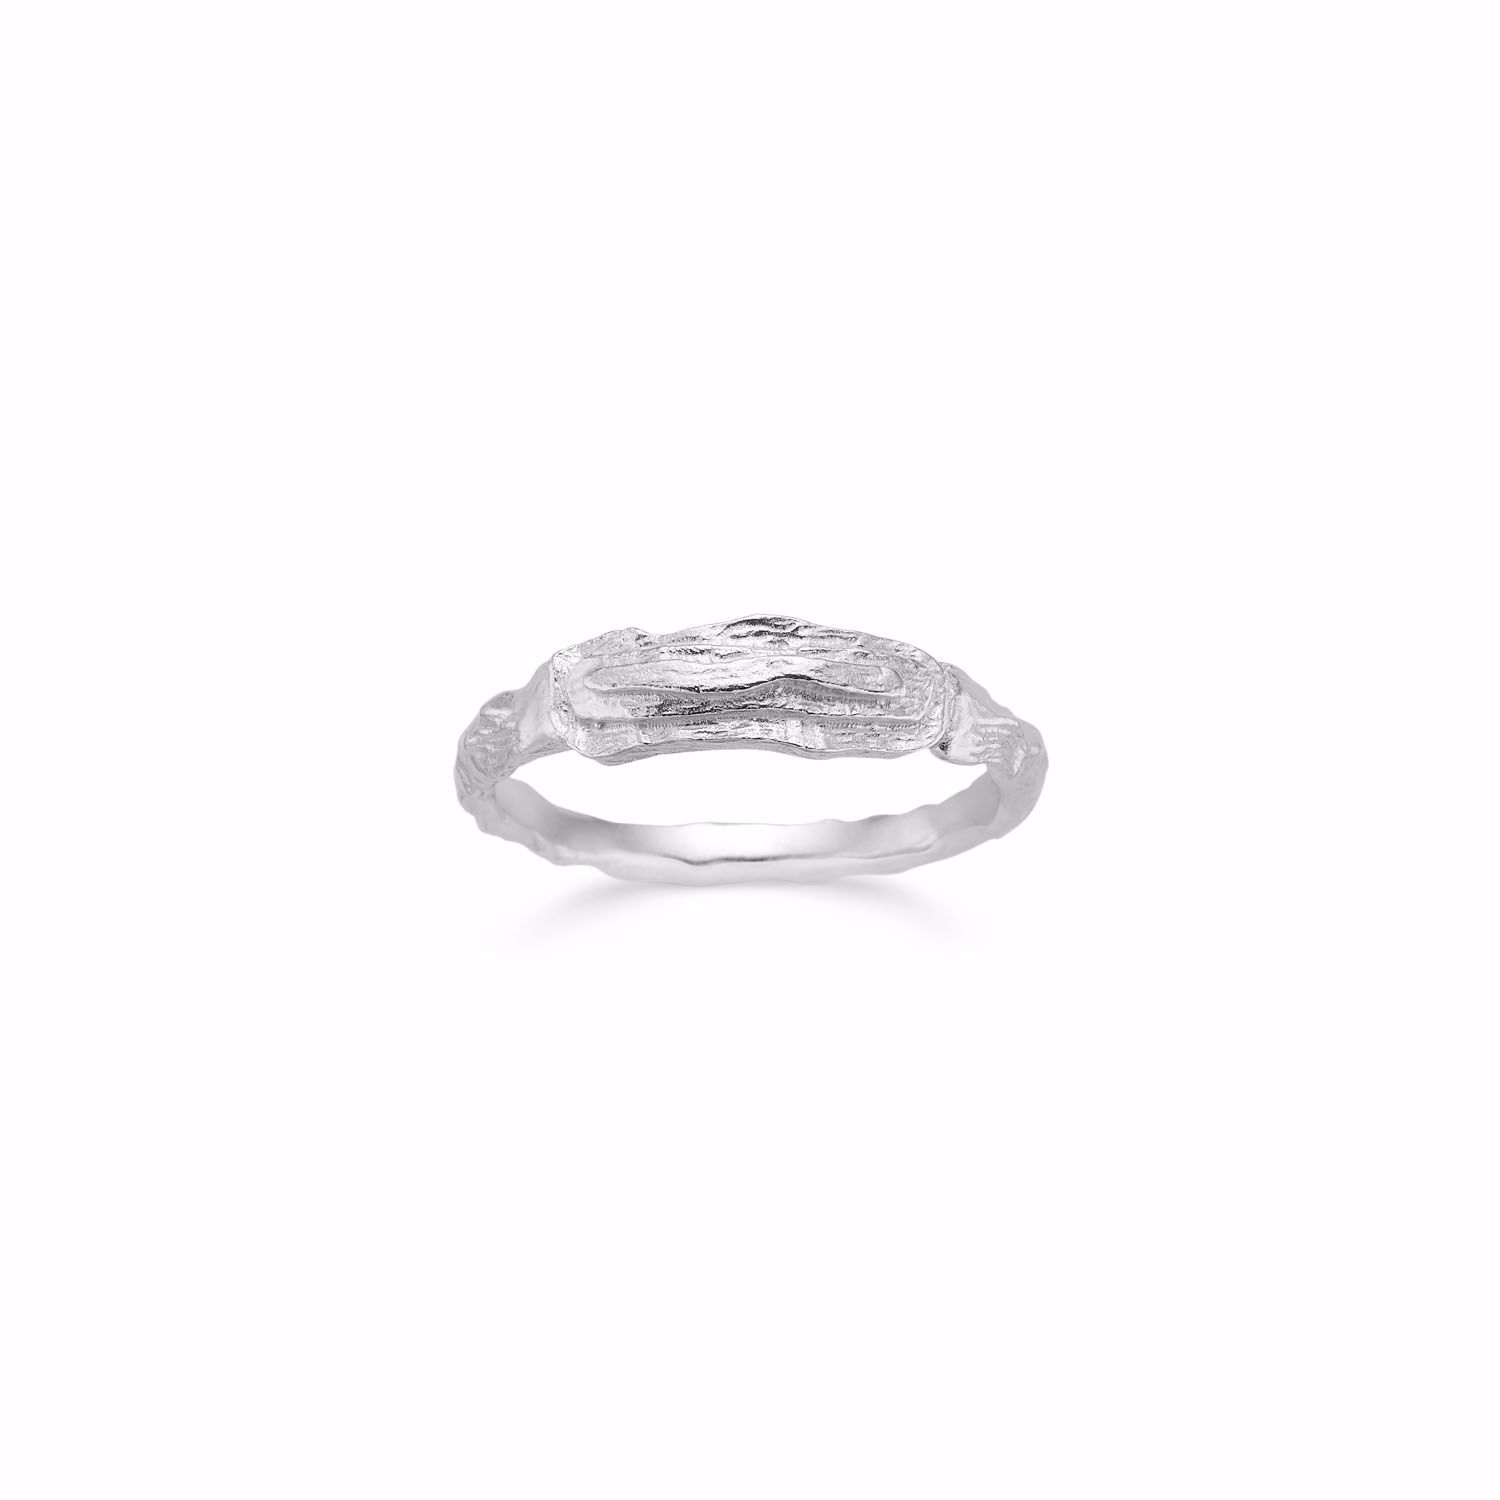 Seville Jewelry sølv ring rustik overflade 2654